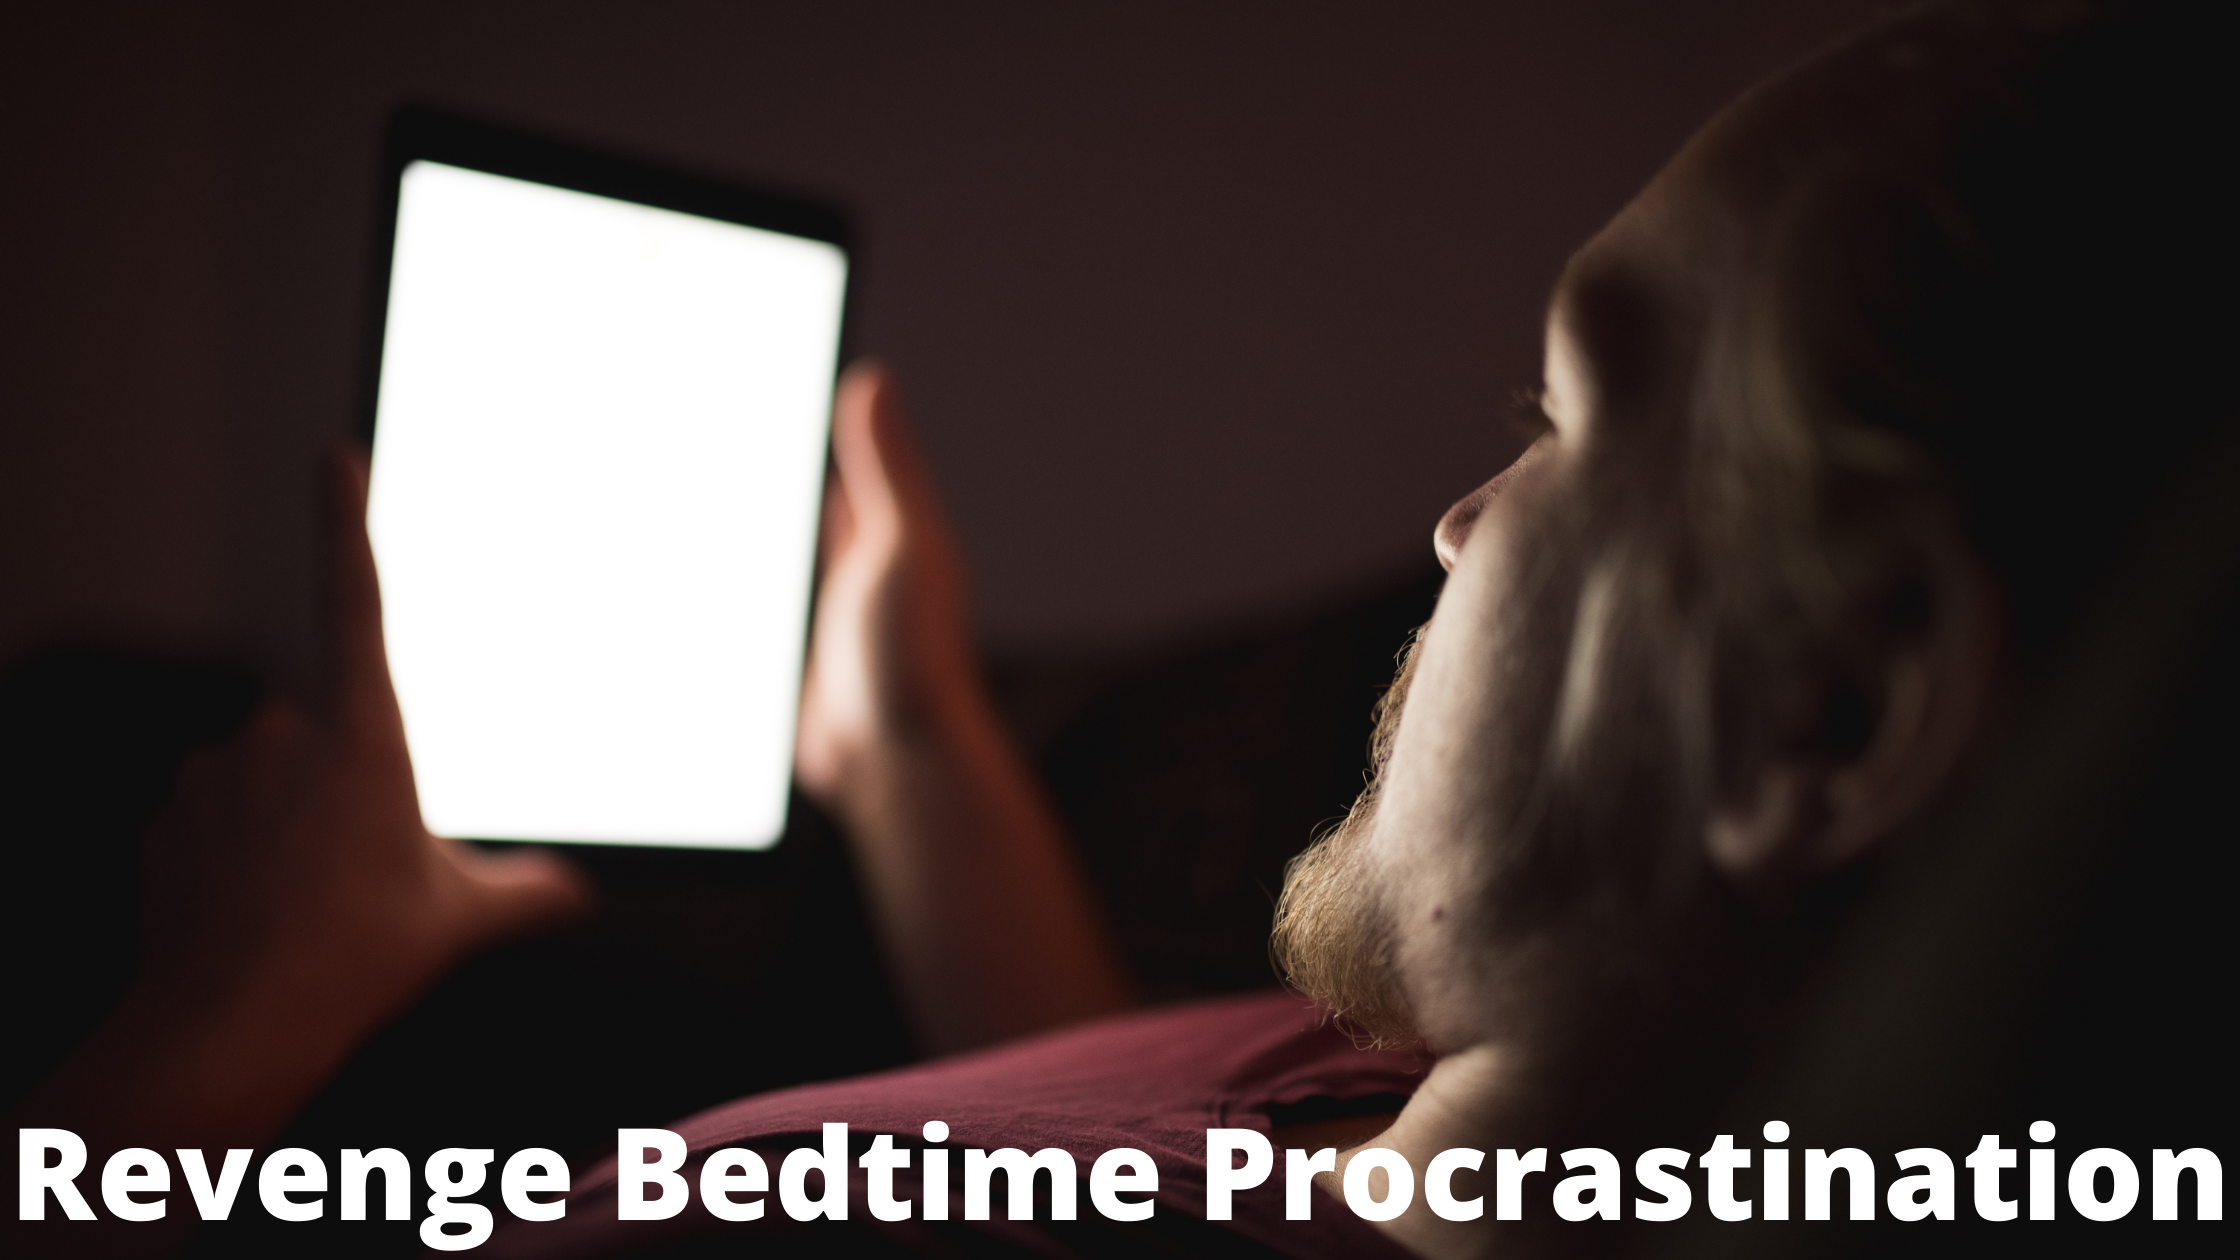 What is revenge bedtime procrastination?